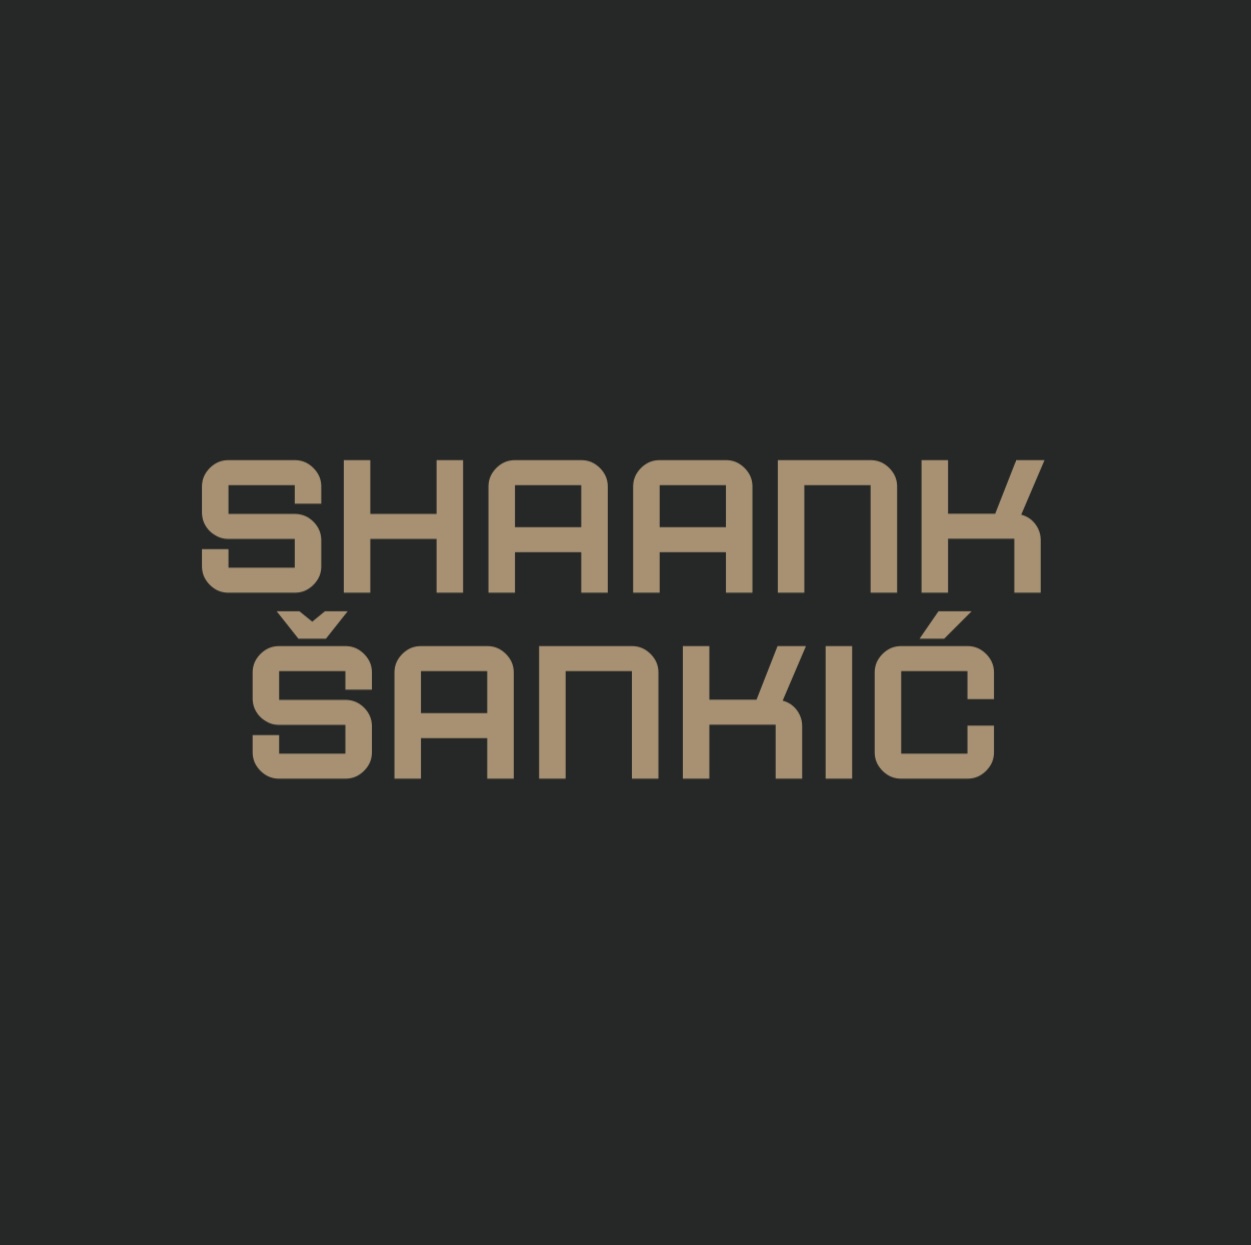 Shaank.šankić logo Logo